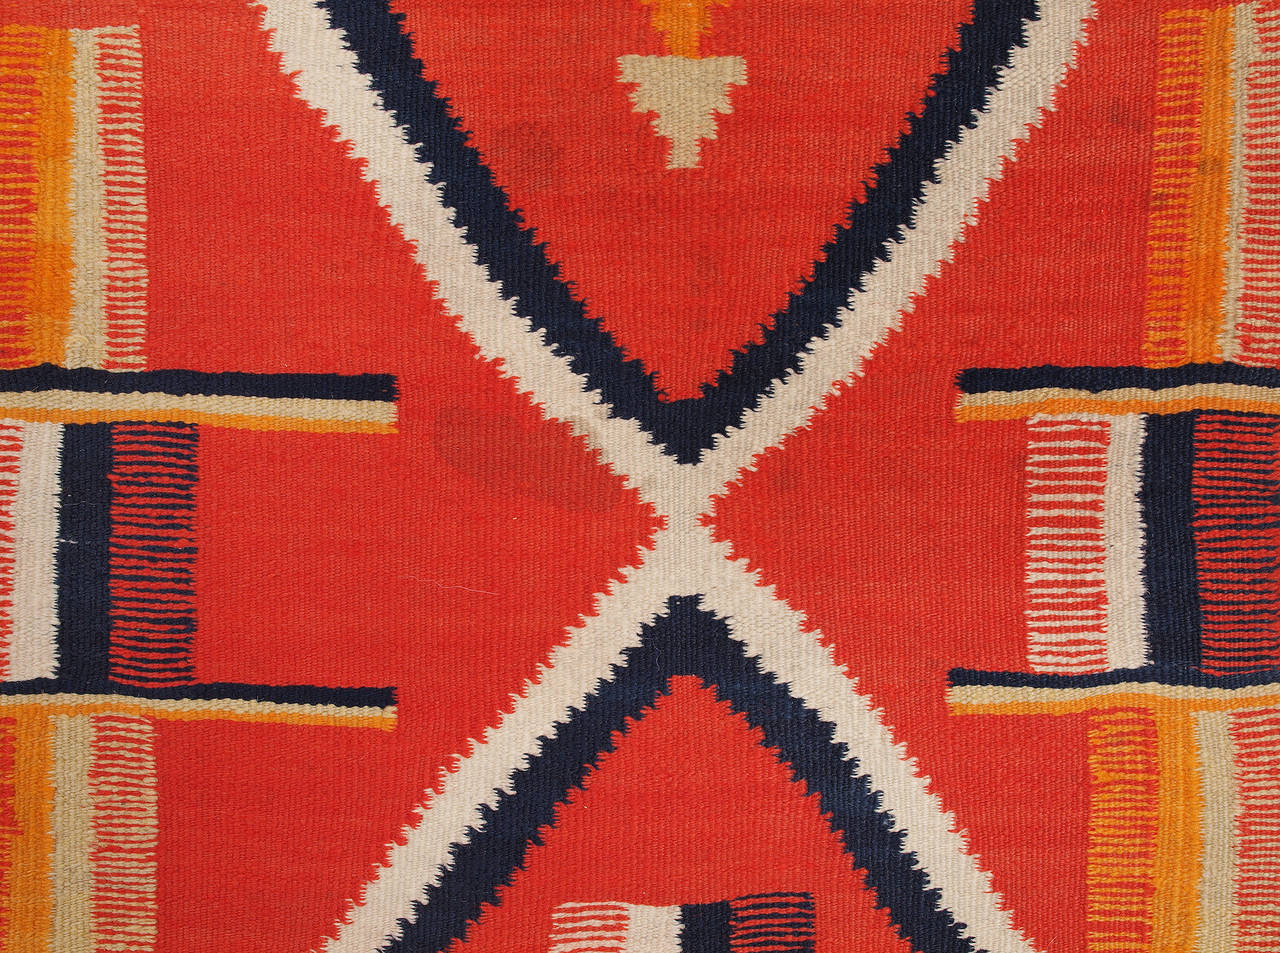 Native American Late Classic Period Navajo Wearing Blanket, circa 1875